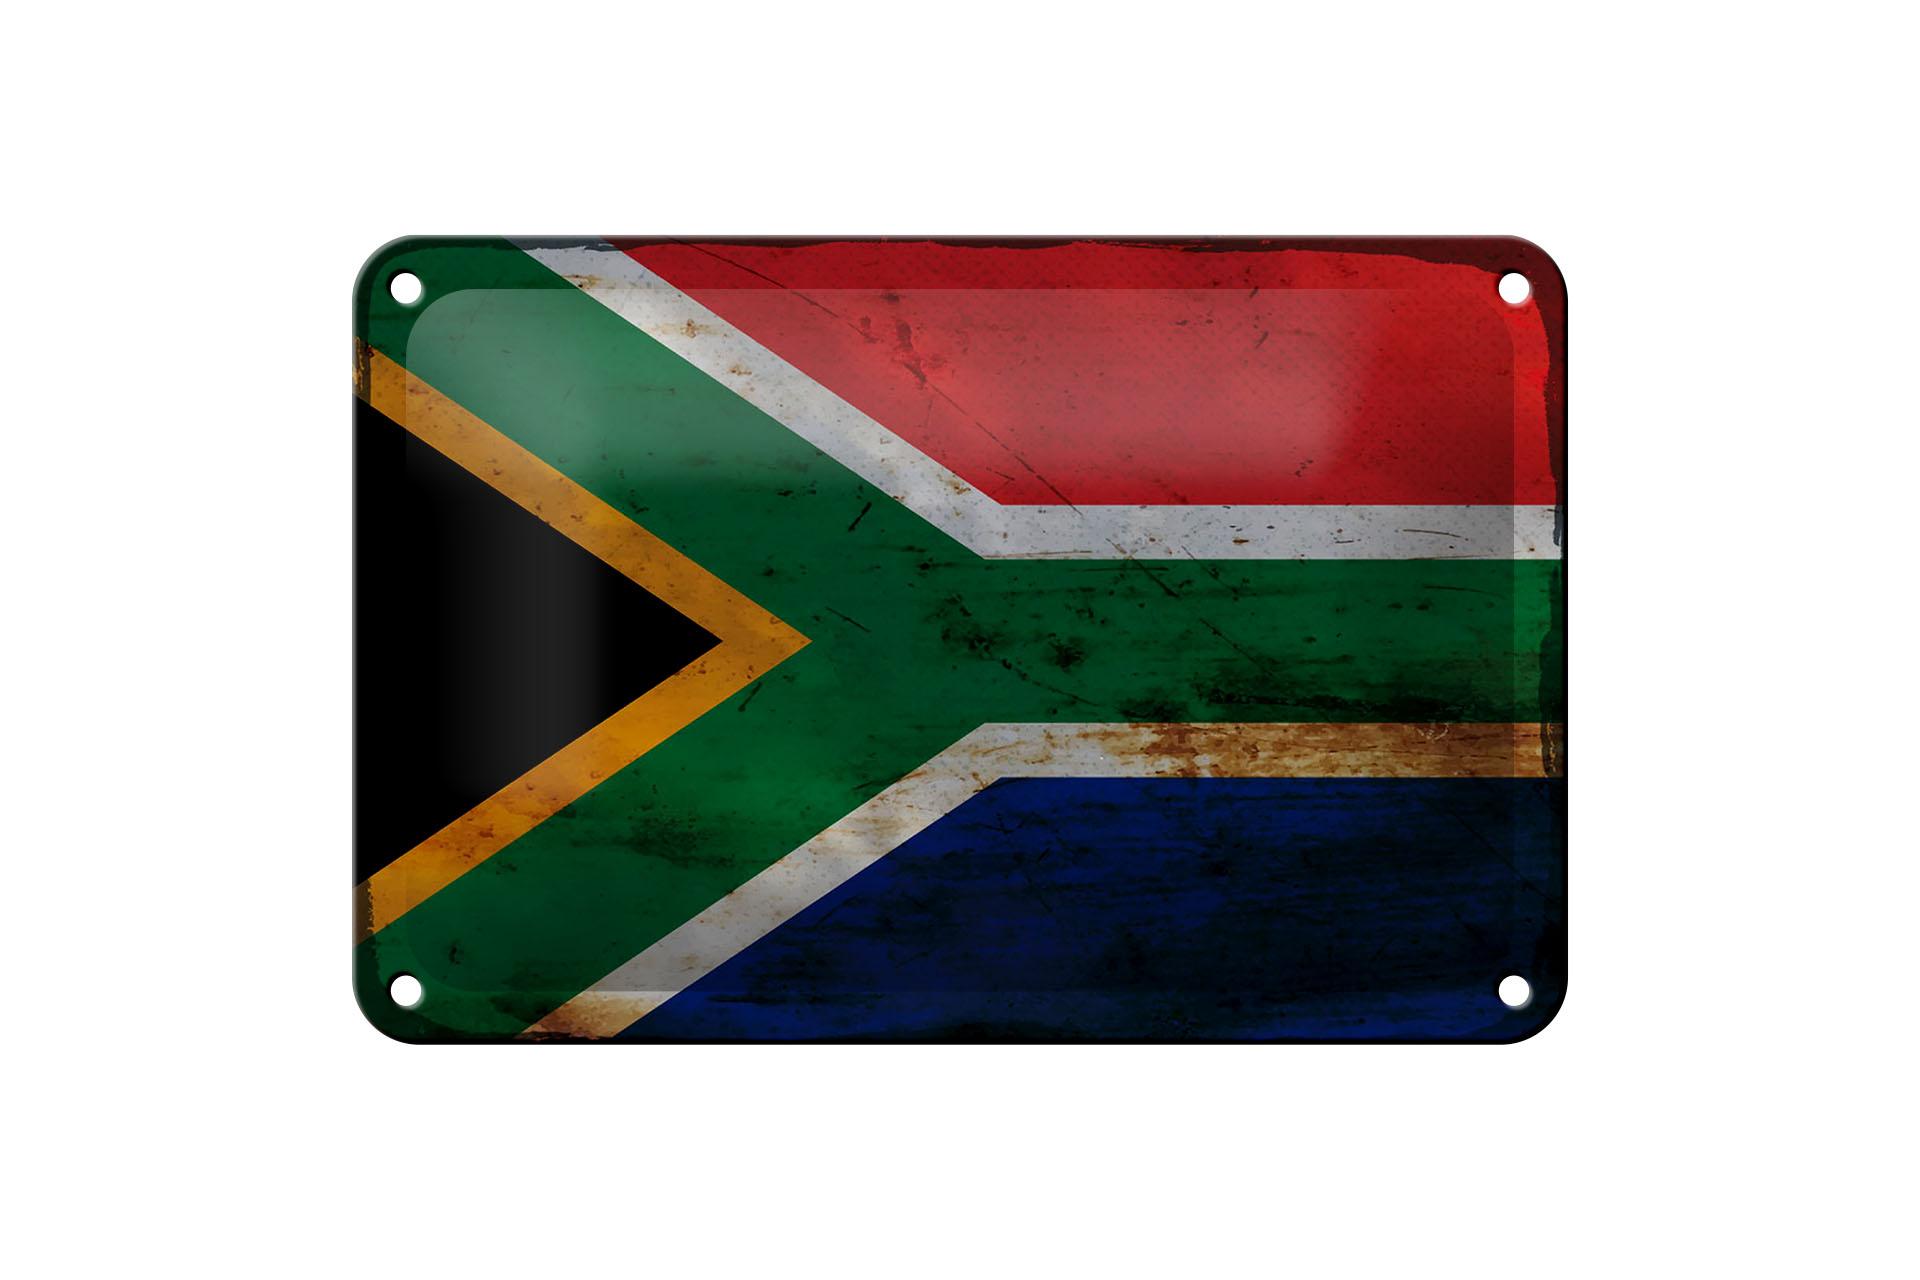 Blechschild Flagge Südafrika 18x12 cm South Africa Rost Deko Schild